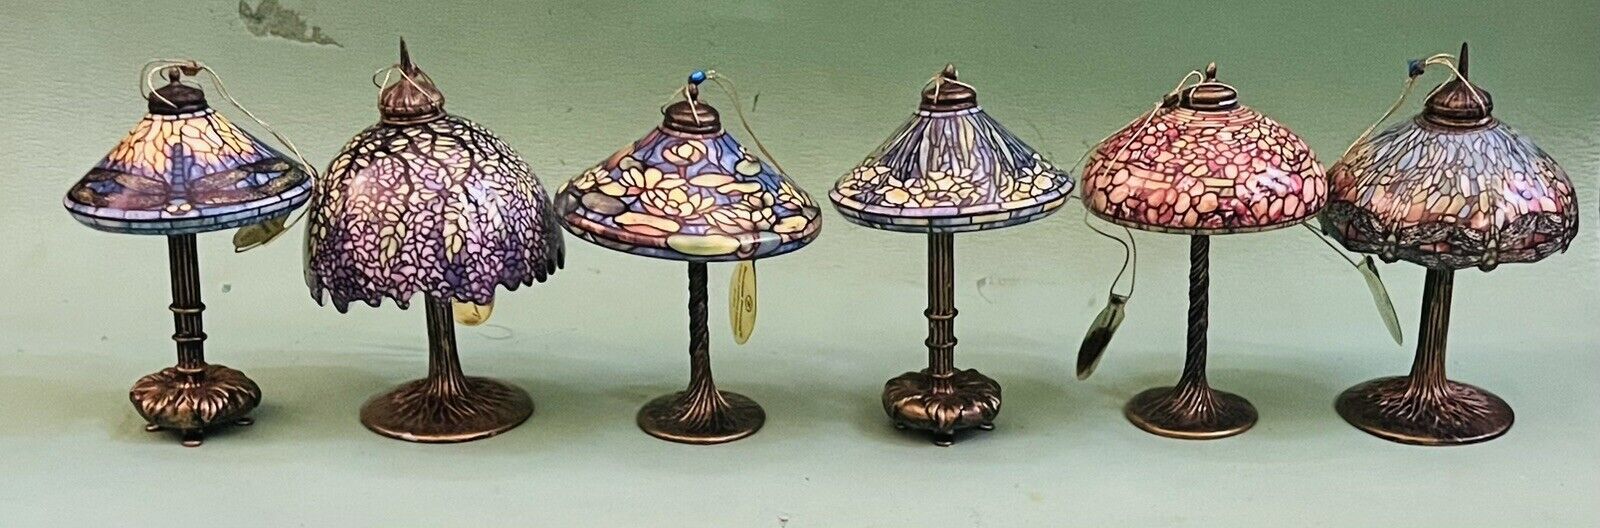 Bradford Exchange Louis Comfort Tiffany Lamps Heirloom Porcelain Ornaments Set 6